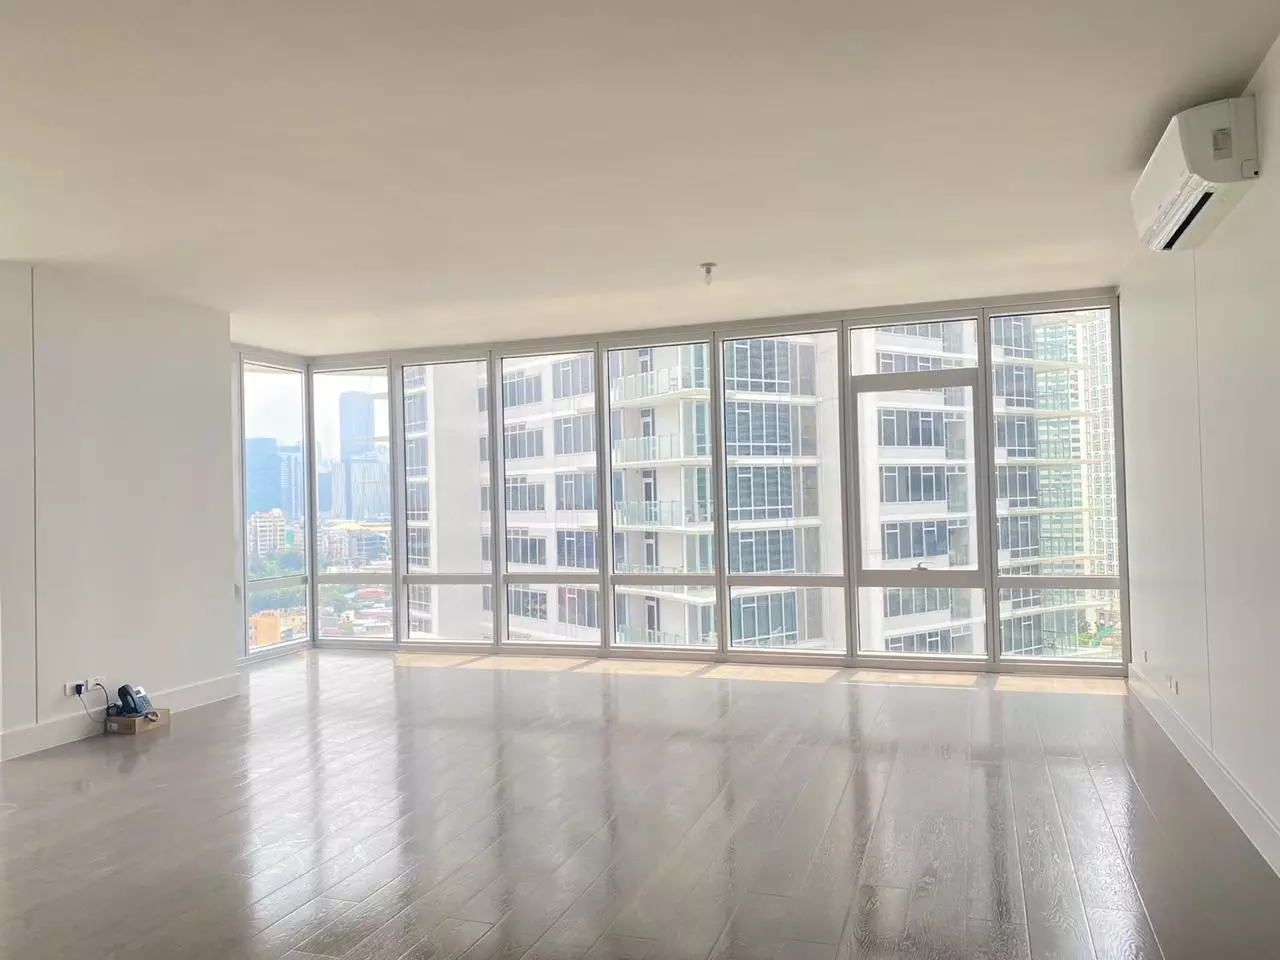 condominium for sale in Makati City in the Philippines